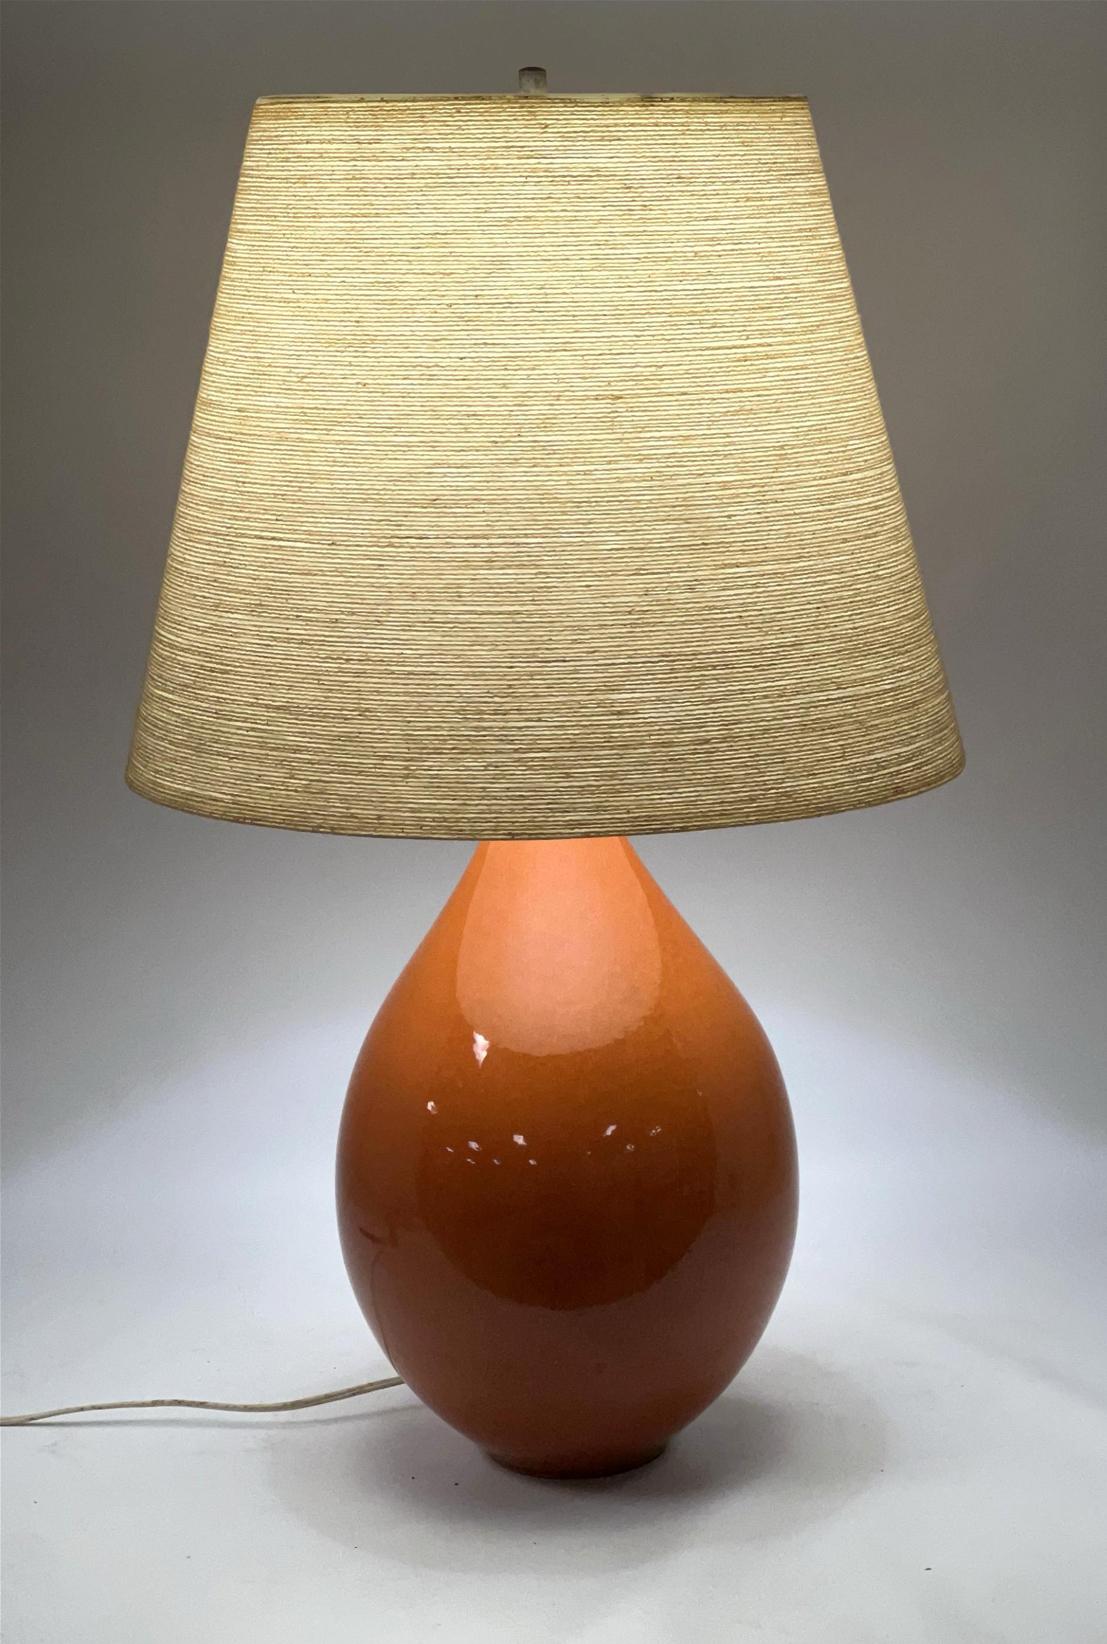 Fiberglass Large Bostlund Gourd Form Ceramic Table Lamp With Original Bostlund Shade For Sale